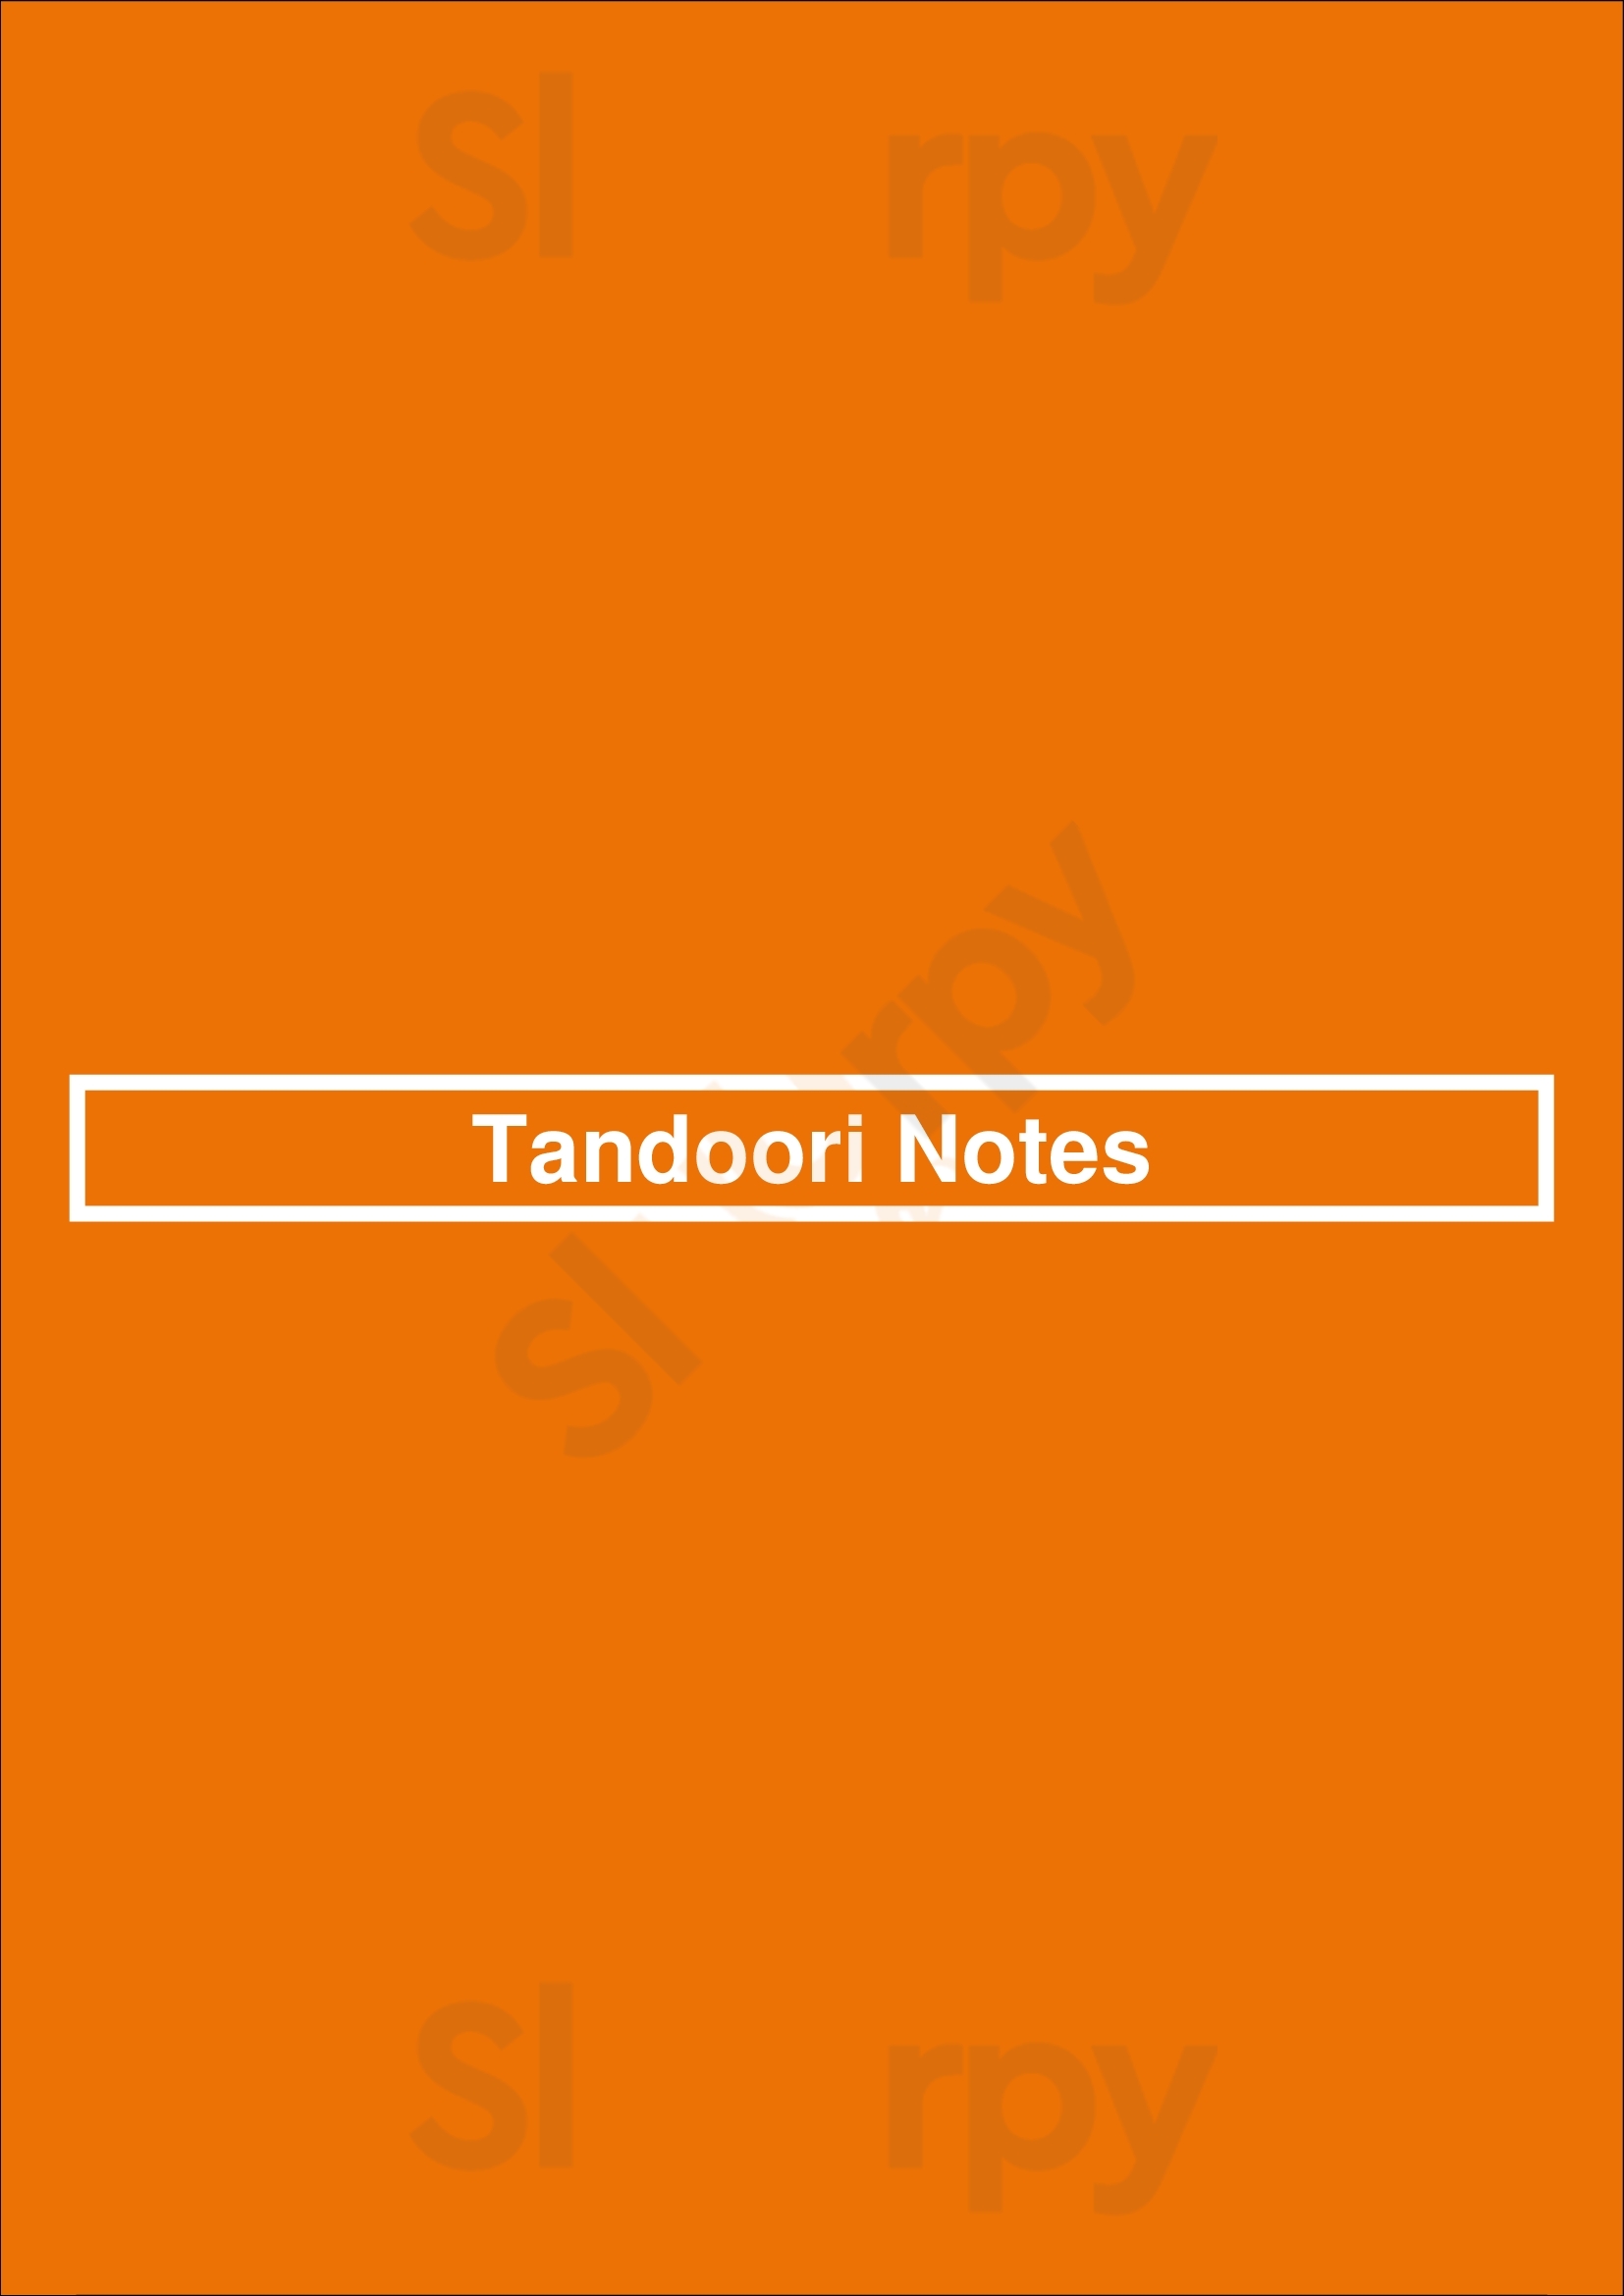 Tandoori Notes Mississauga Menu - 1